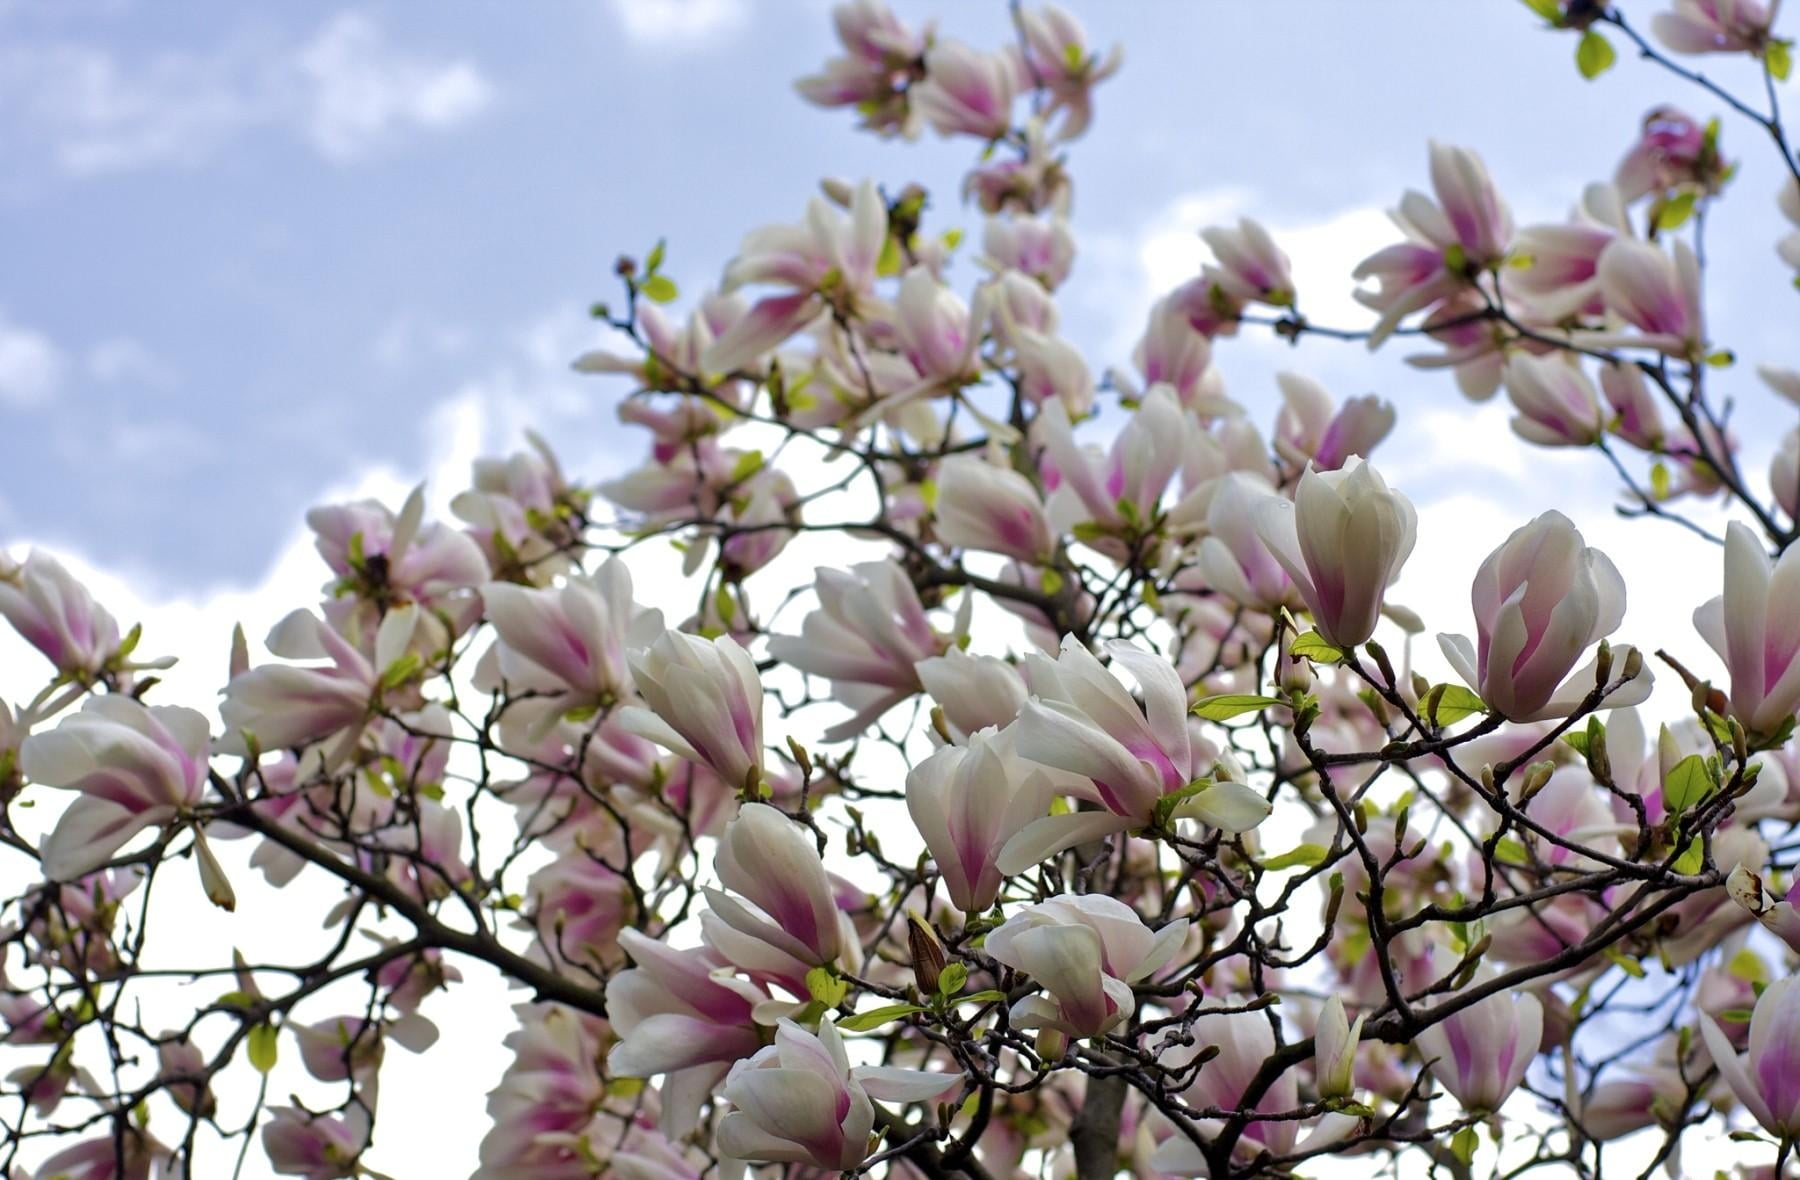 white-and-pink Magnolias closeup photo